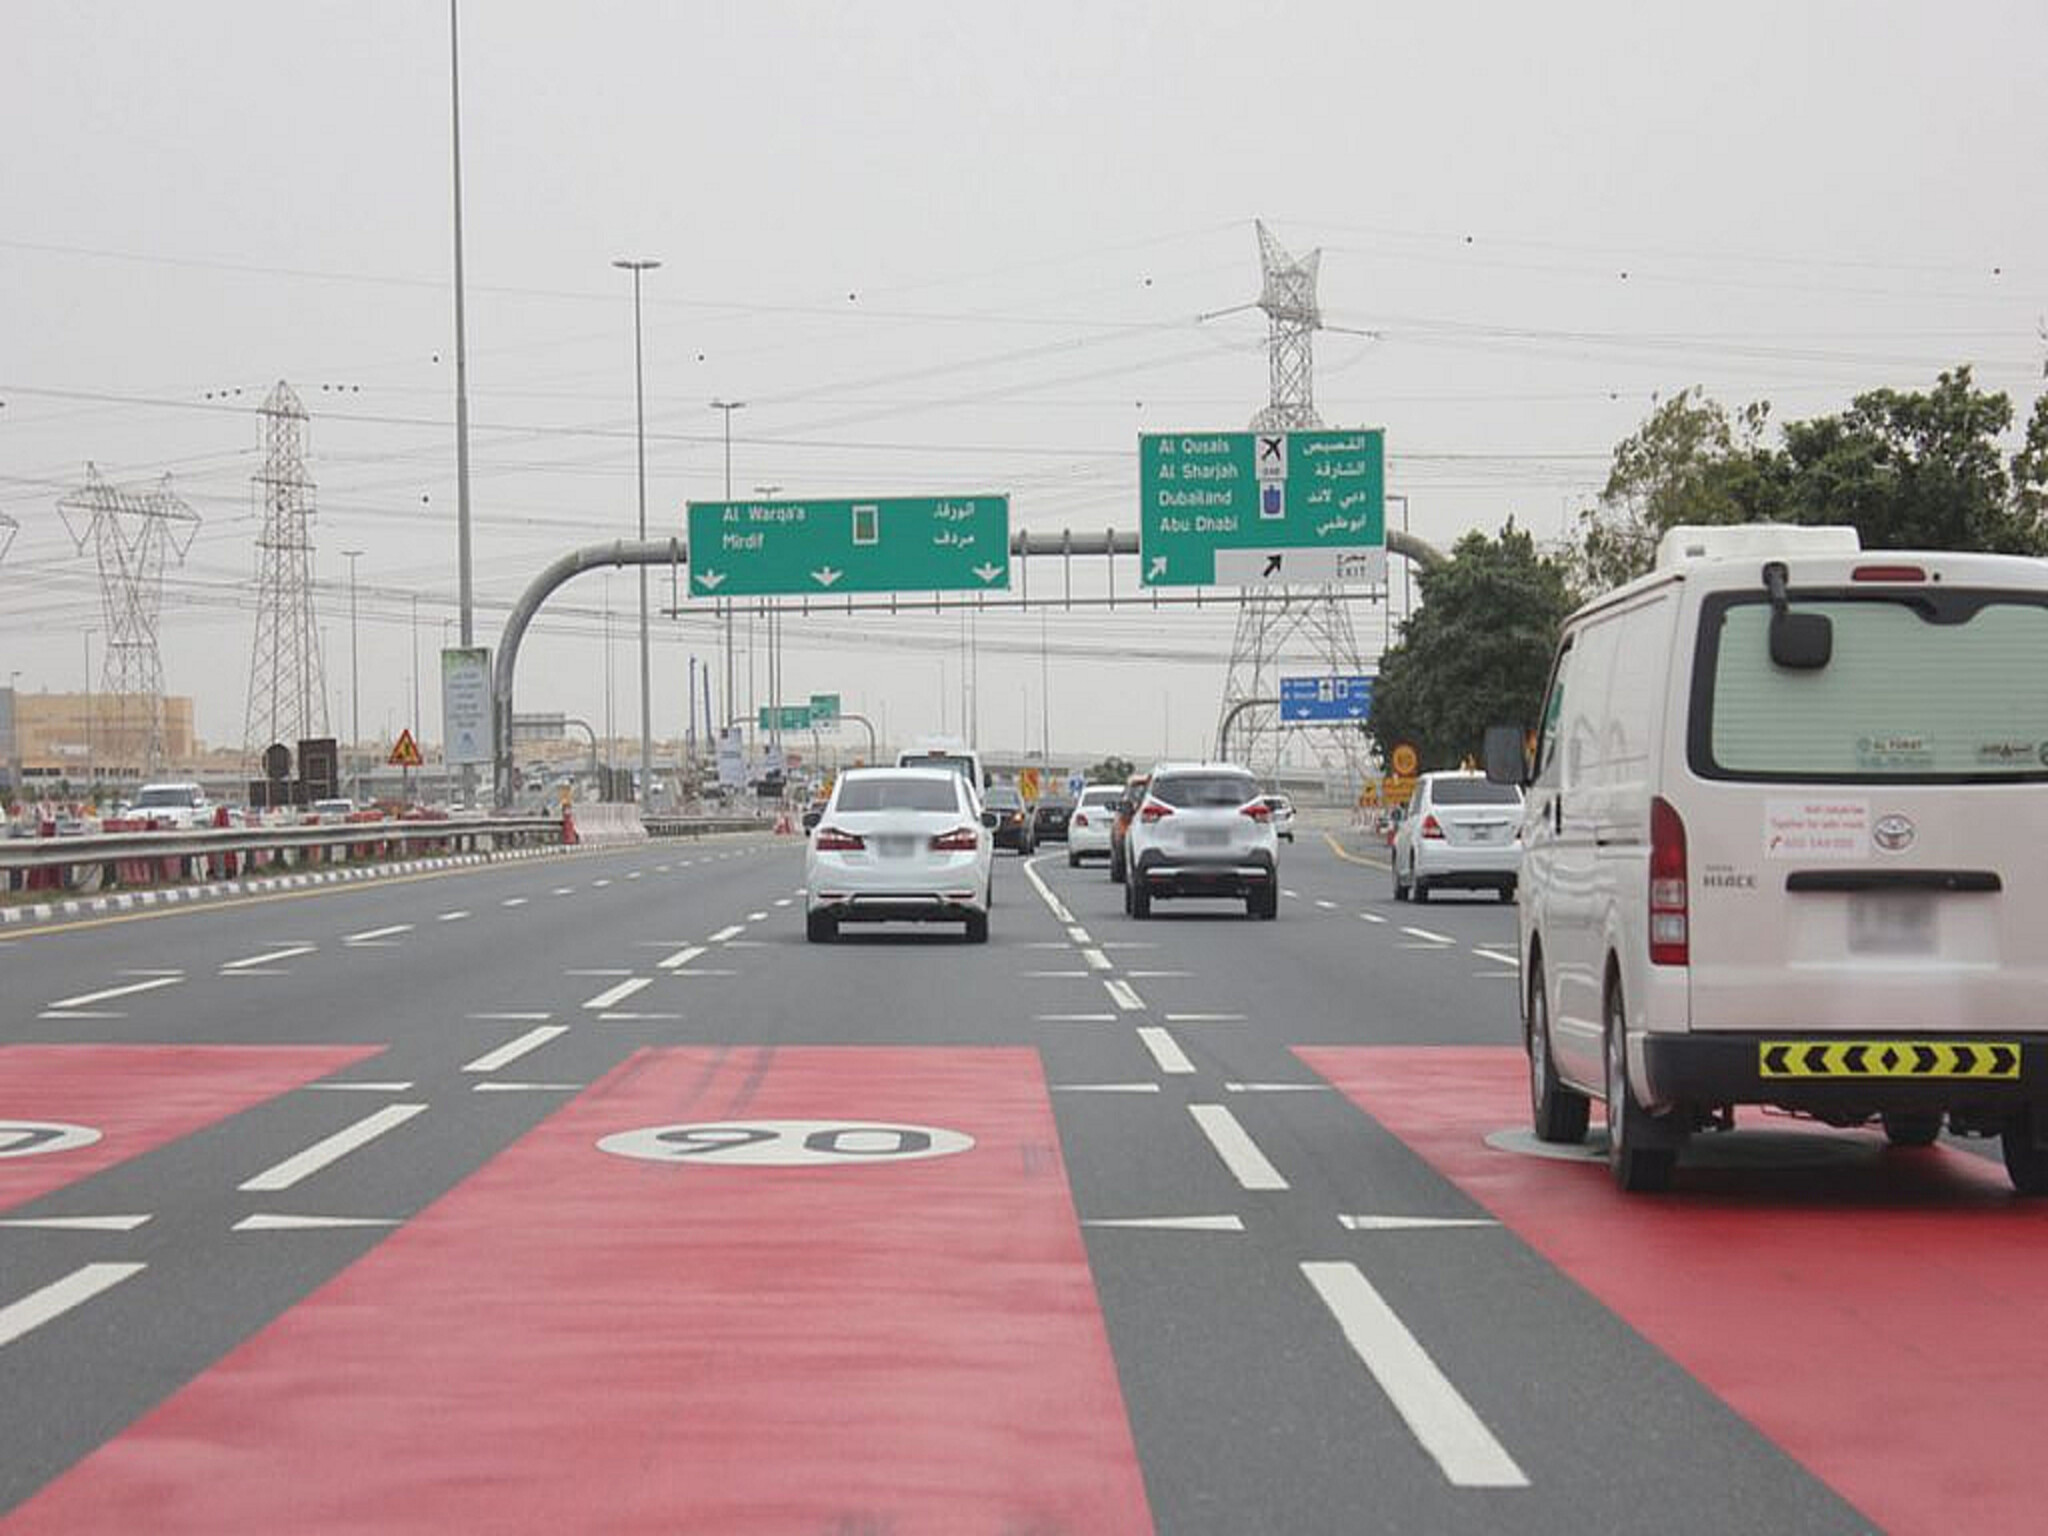 On certain days, Dubai cancels all traffic violations